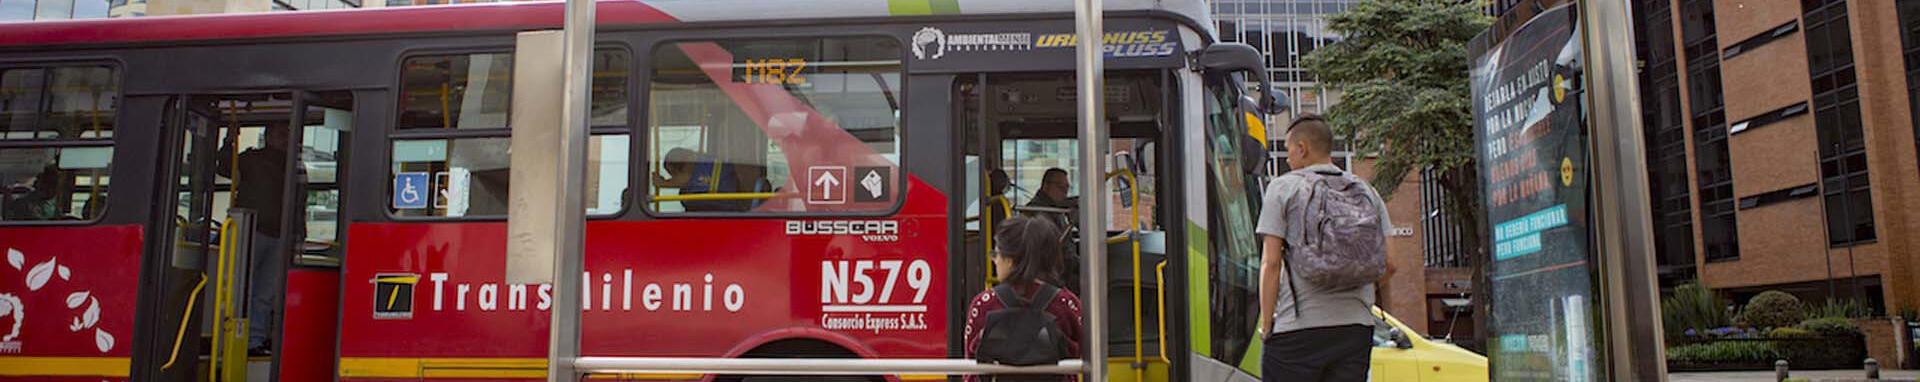 Bogotá, Colombia - CIF@10 Hybrid Bus in Bogotá, Colombia, 2018